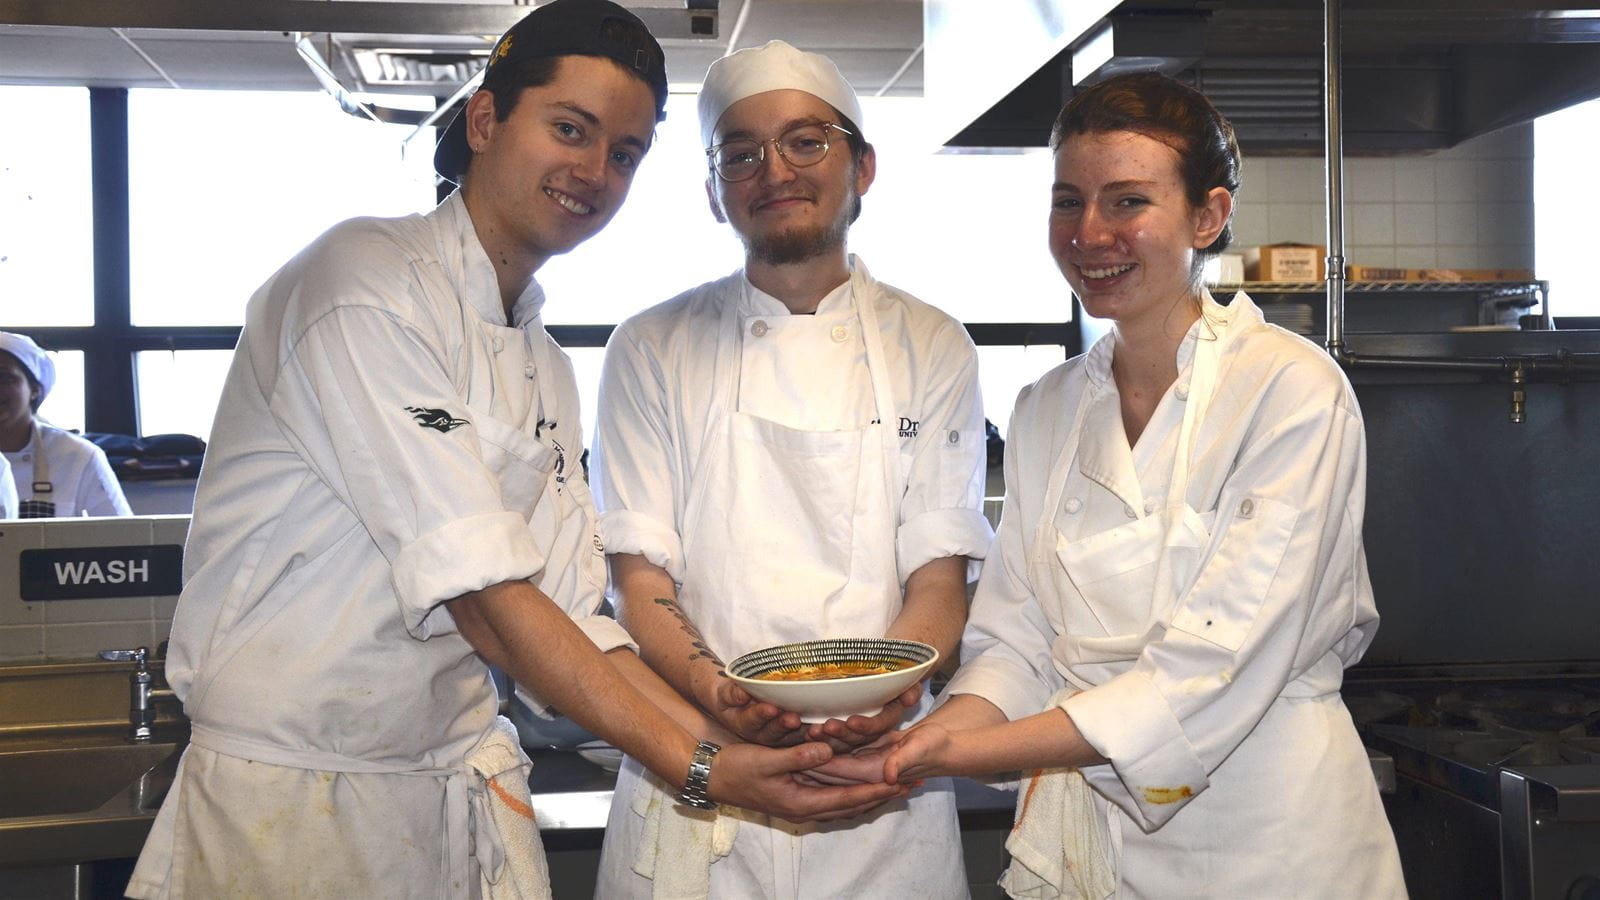 Culinary Arts students Gabe Thayer, Zach Kaczor and Naomi Bass finished making tomato soup.